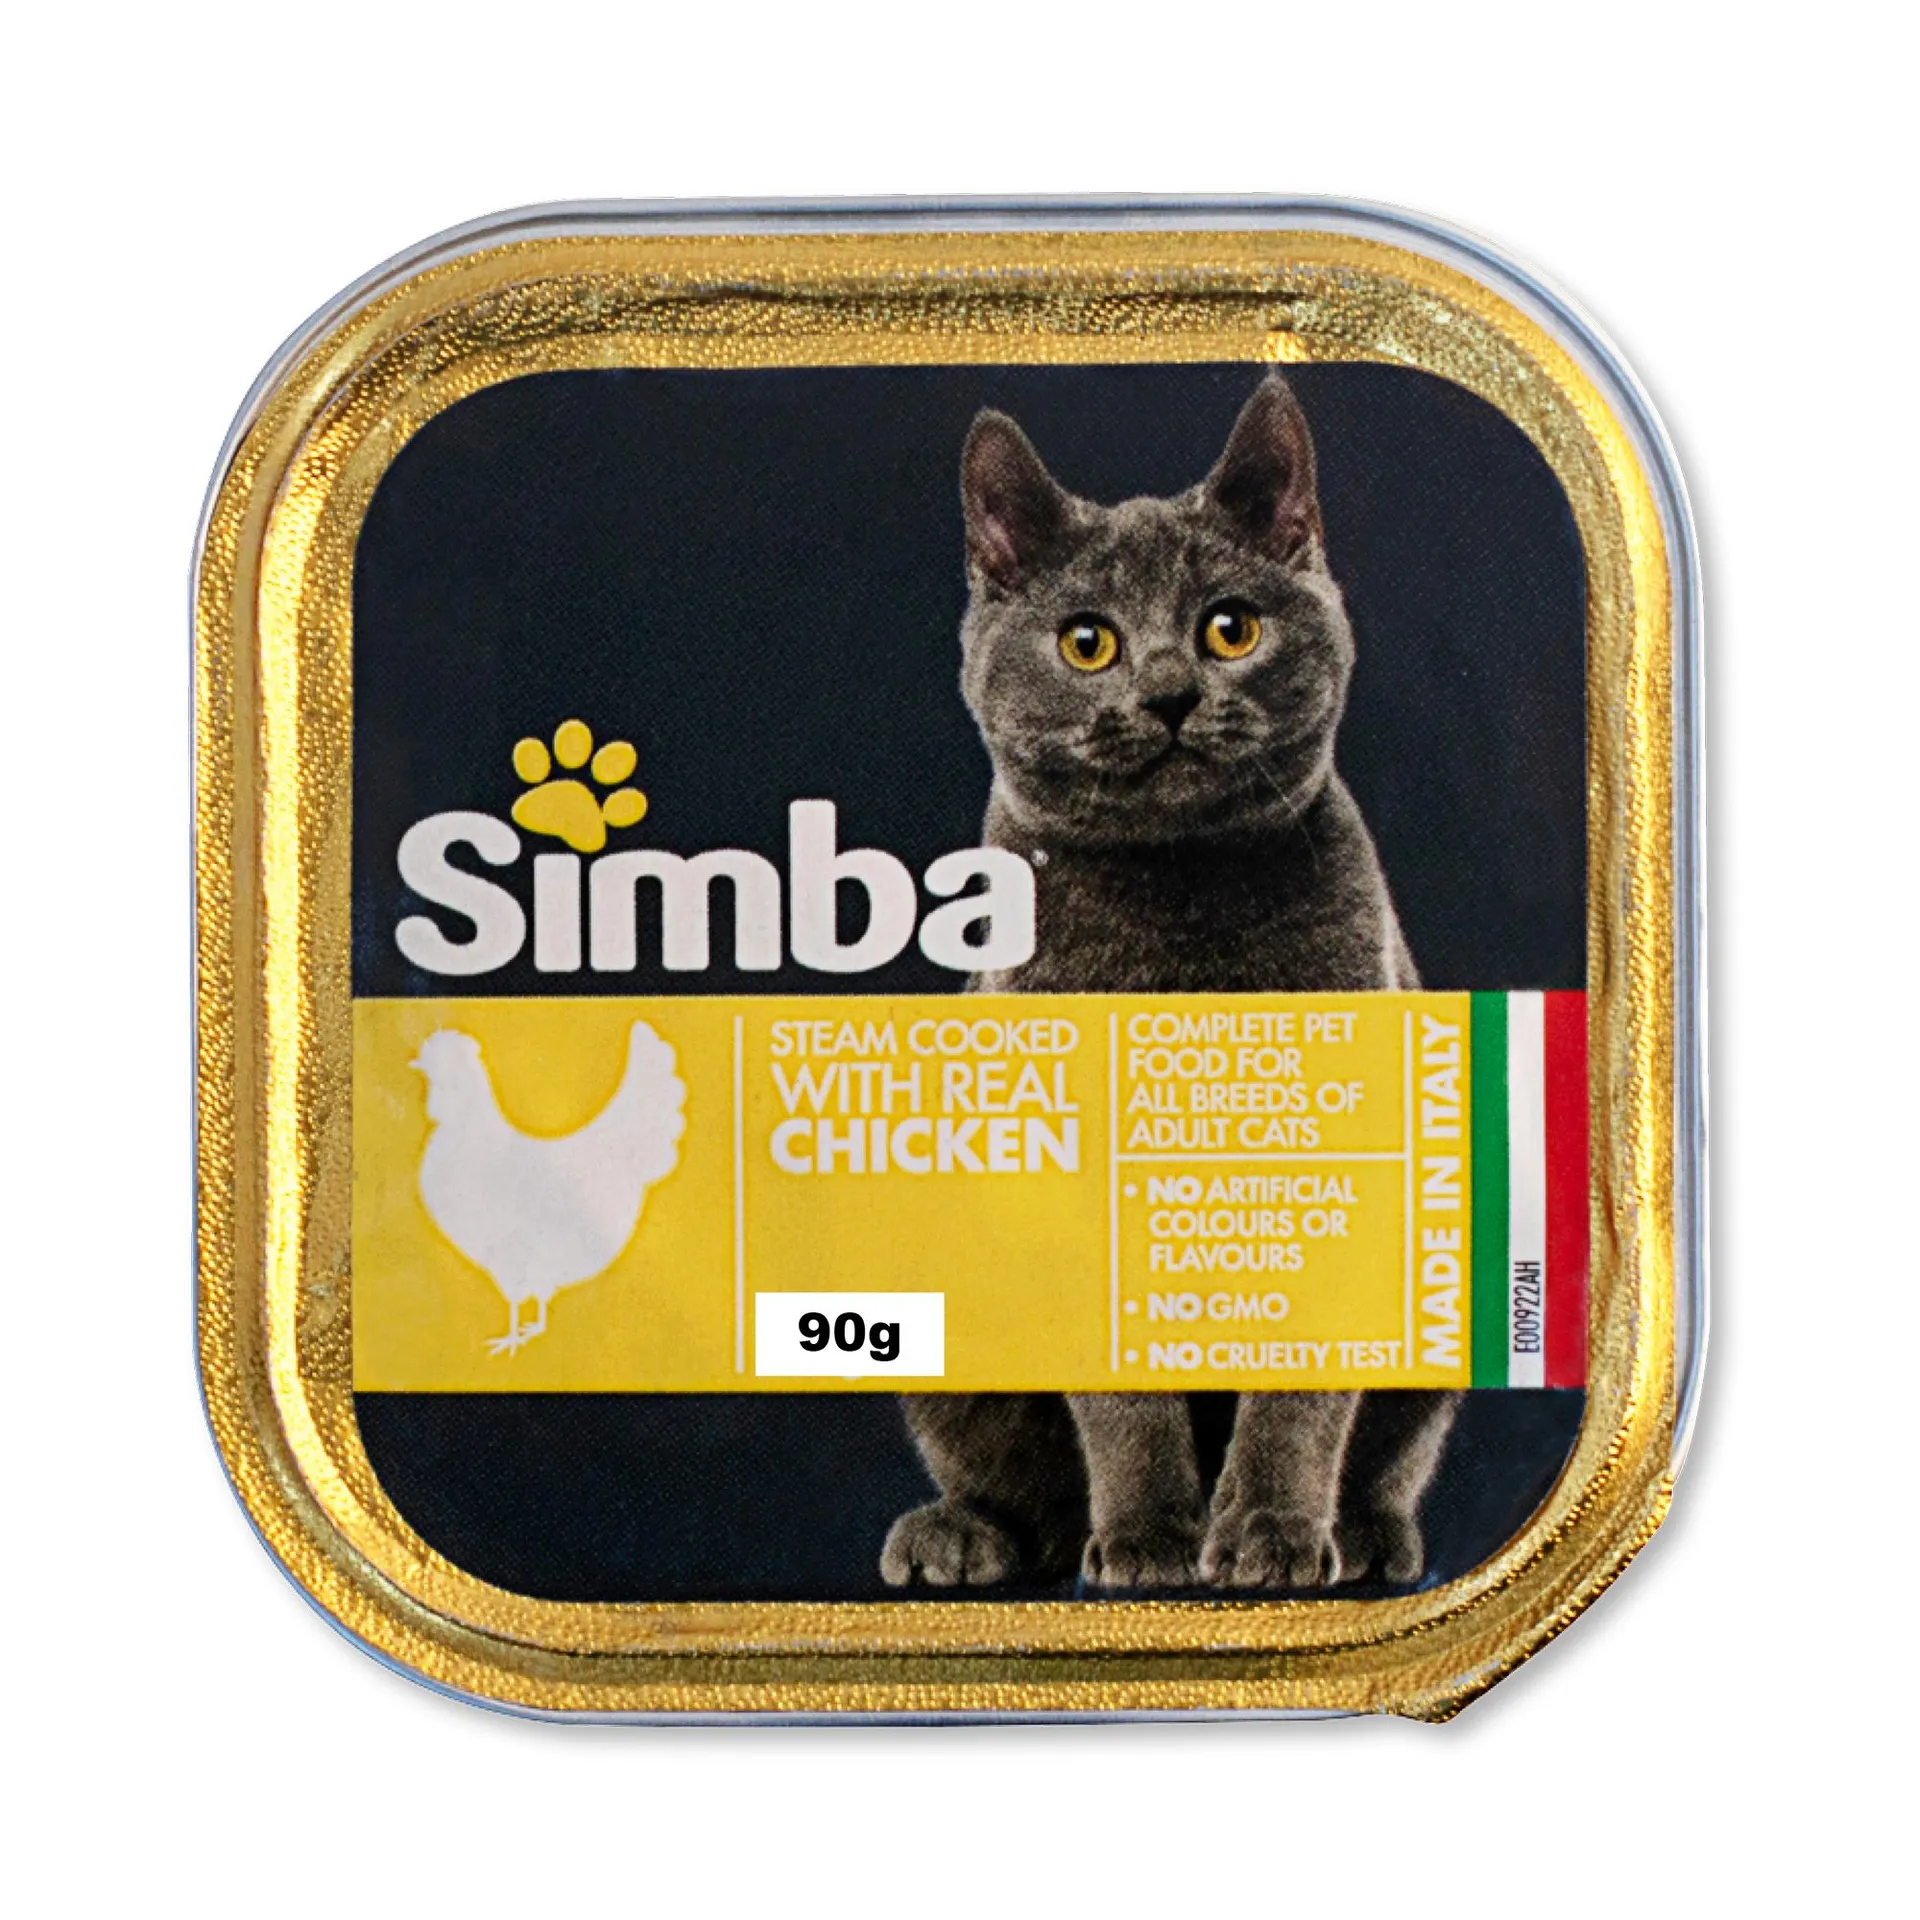 Simba Cat Food Chicken 90g